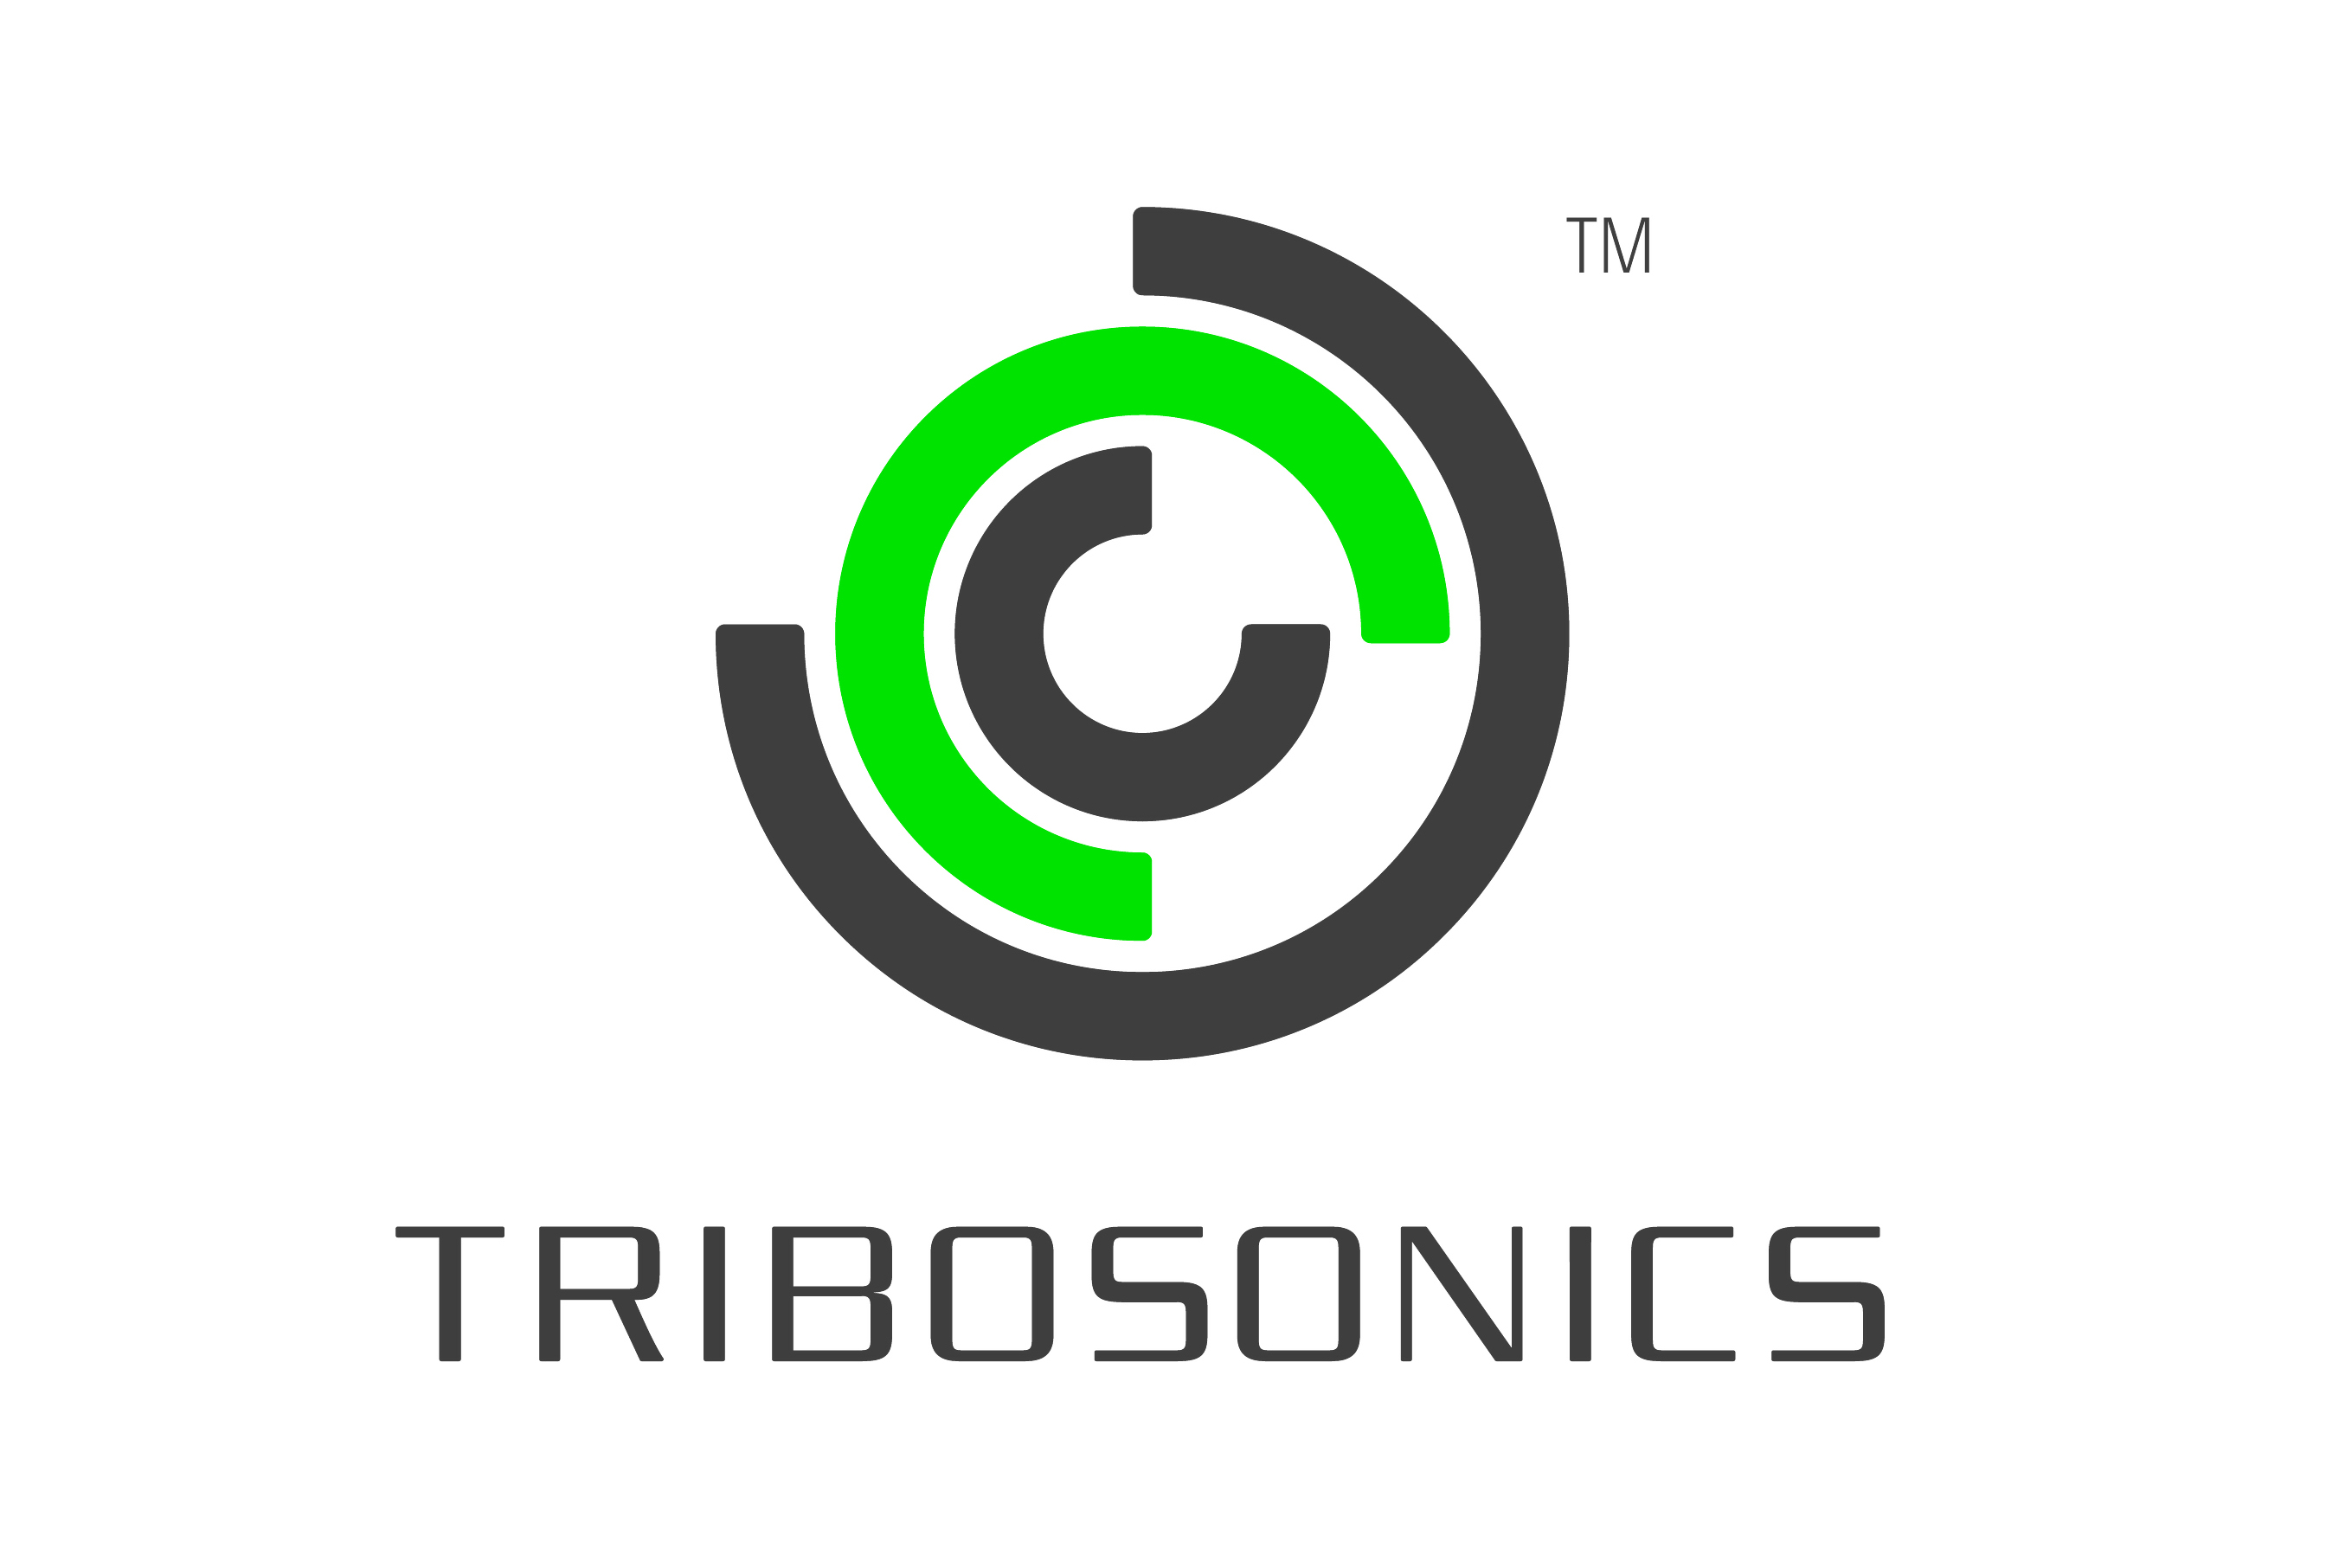 Tribosonics Ltd